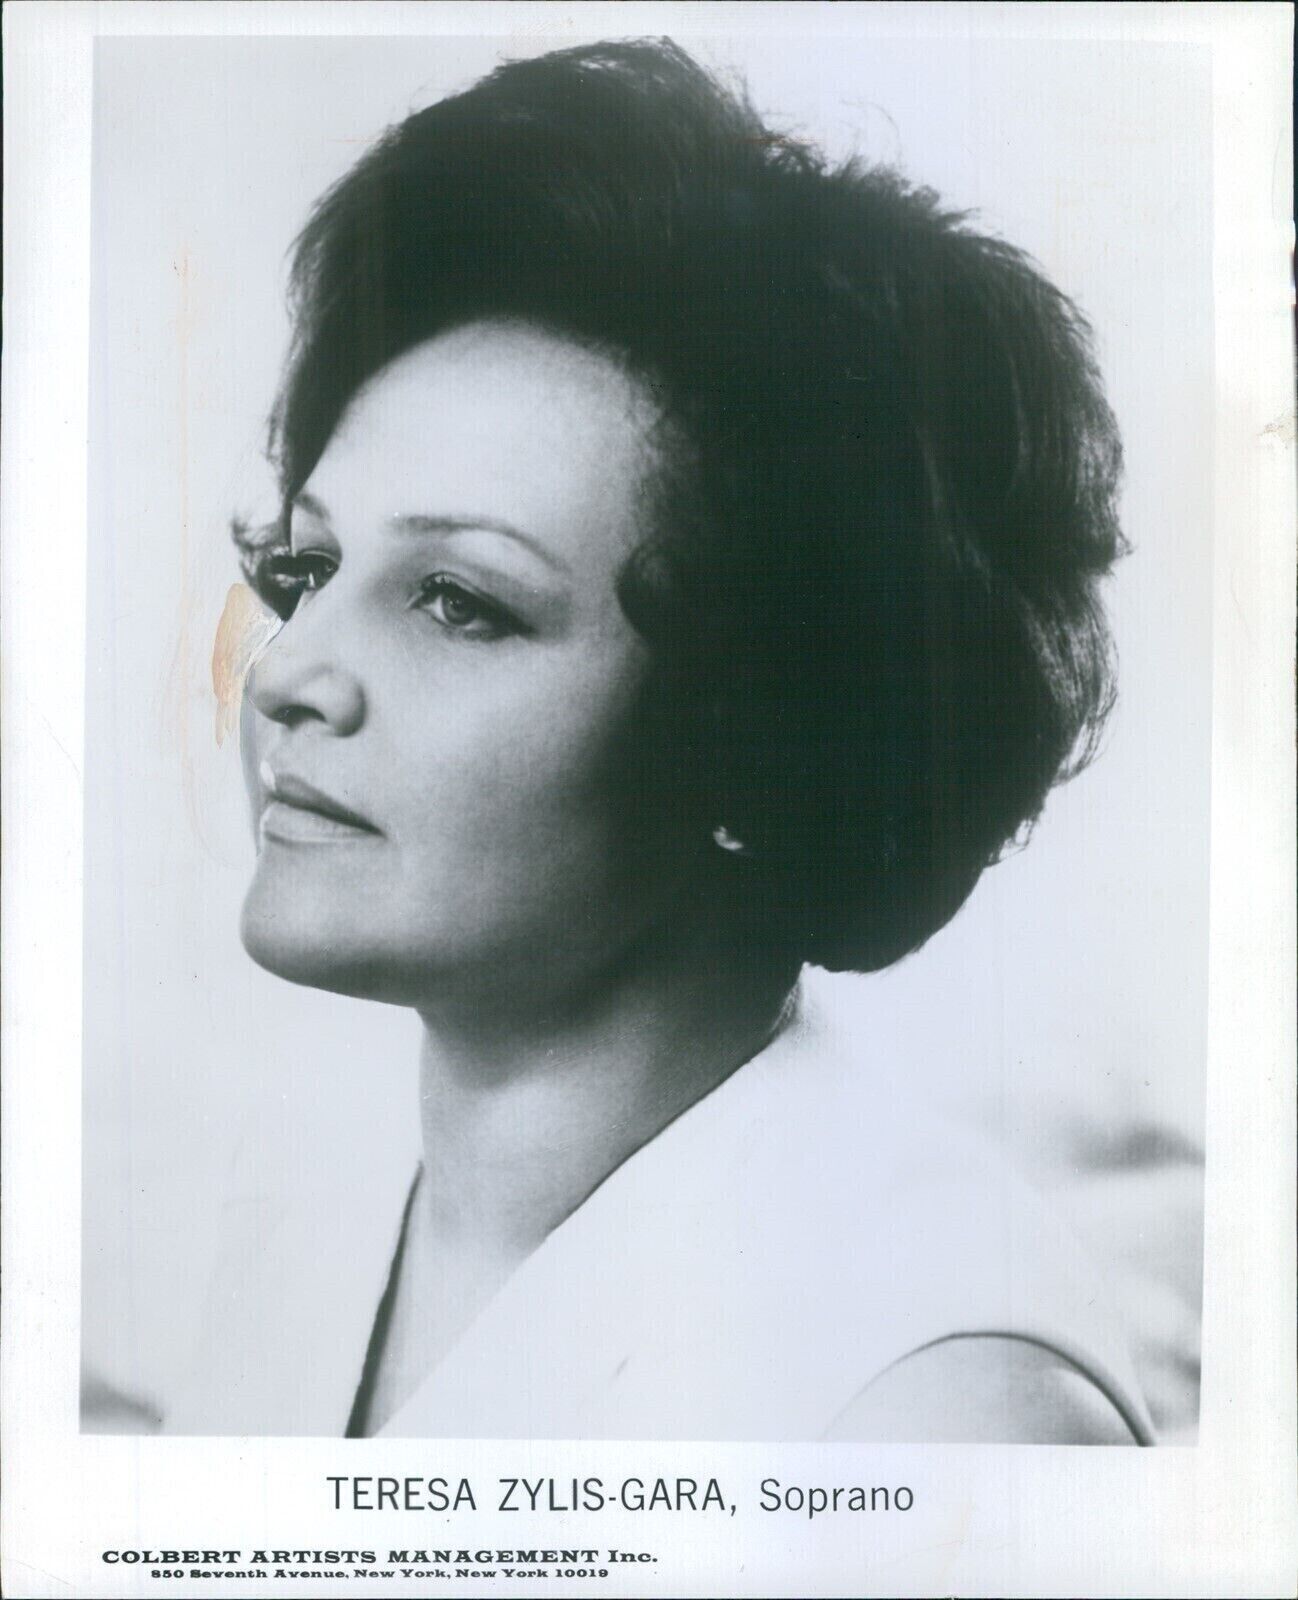 1974 Teresa Zylis Gara Soprano Singer Musician Colbert Artists Beauty 8X10 Photo